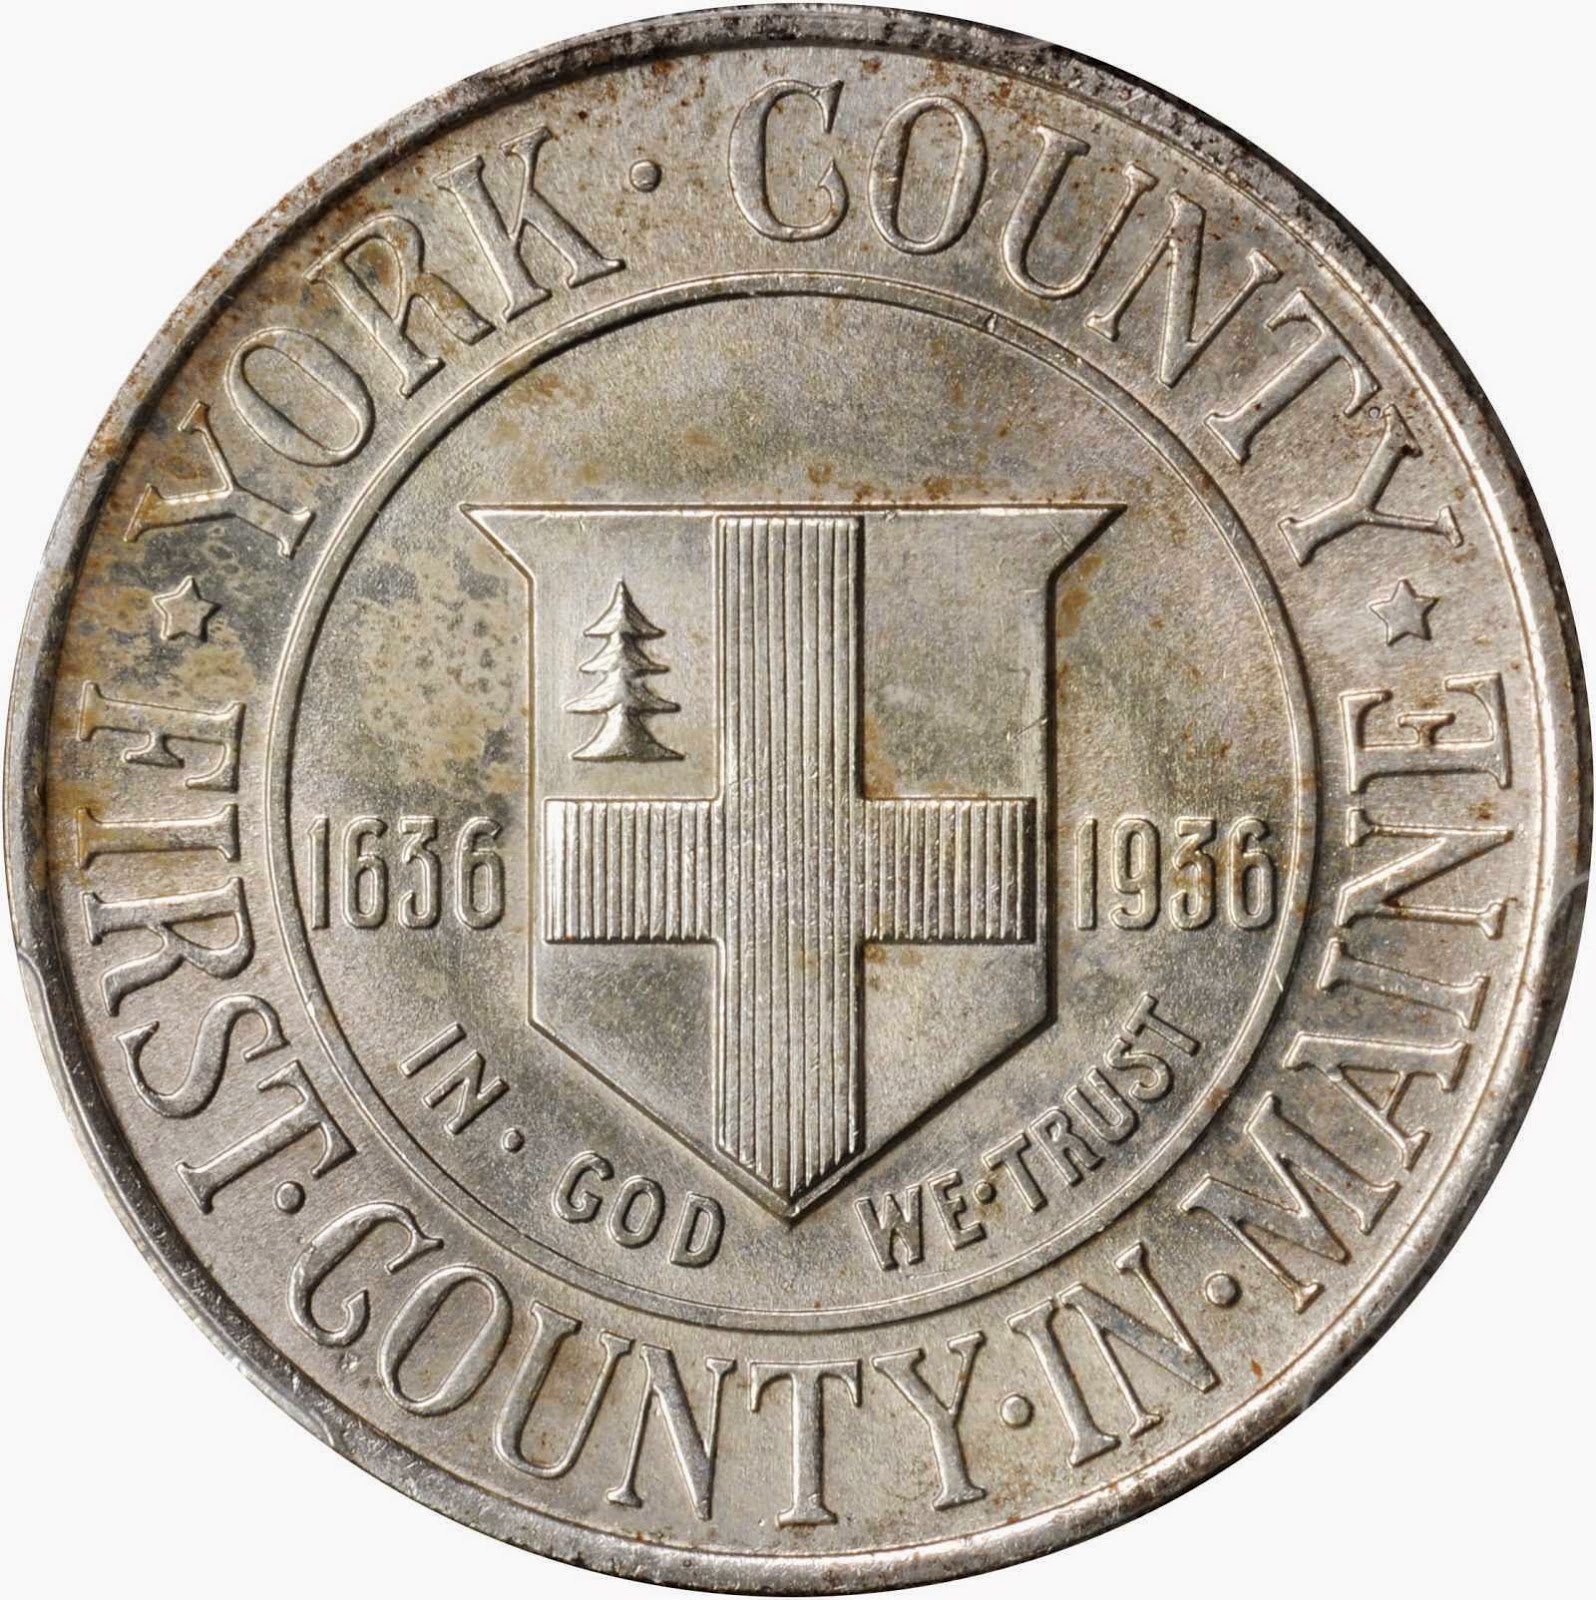 1936 York County Maine Commemorative Half Dollar